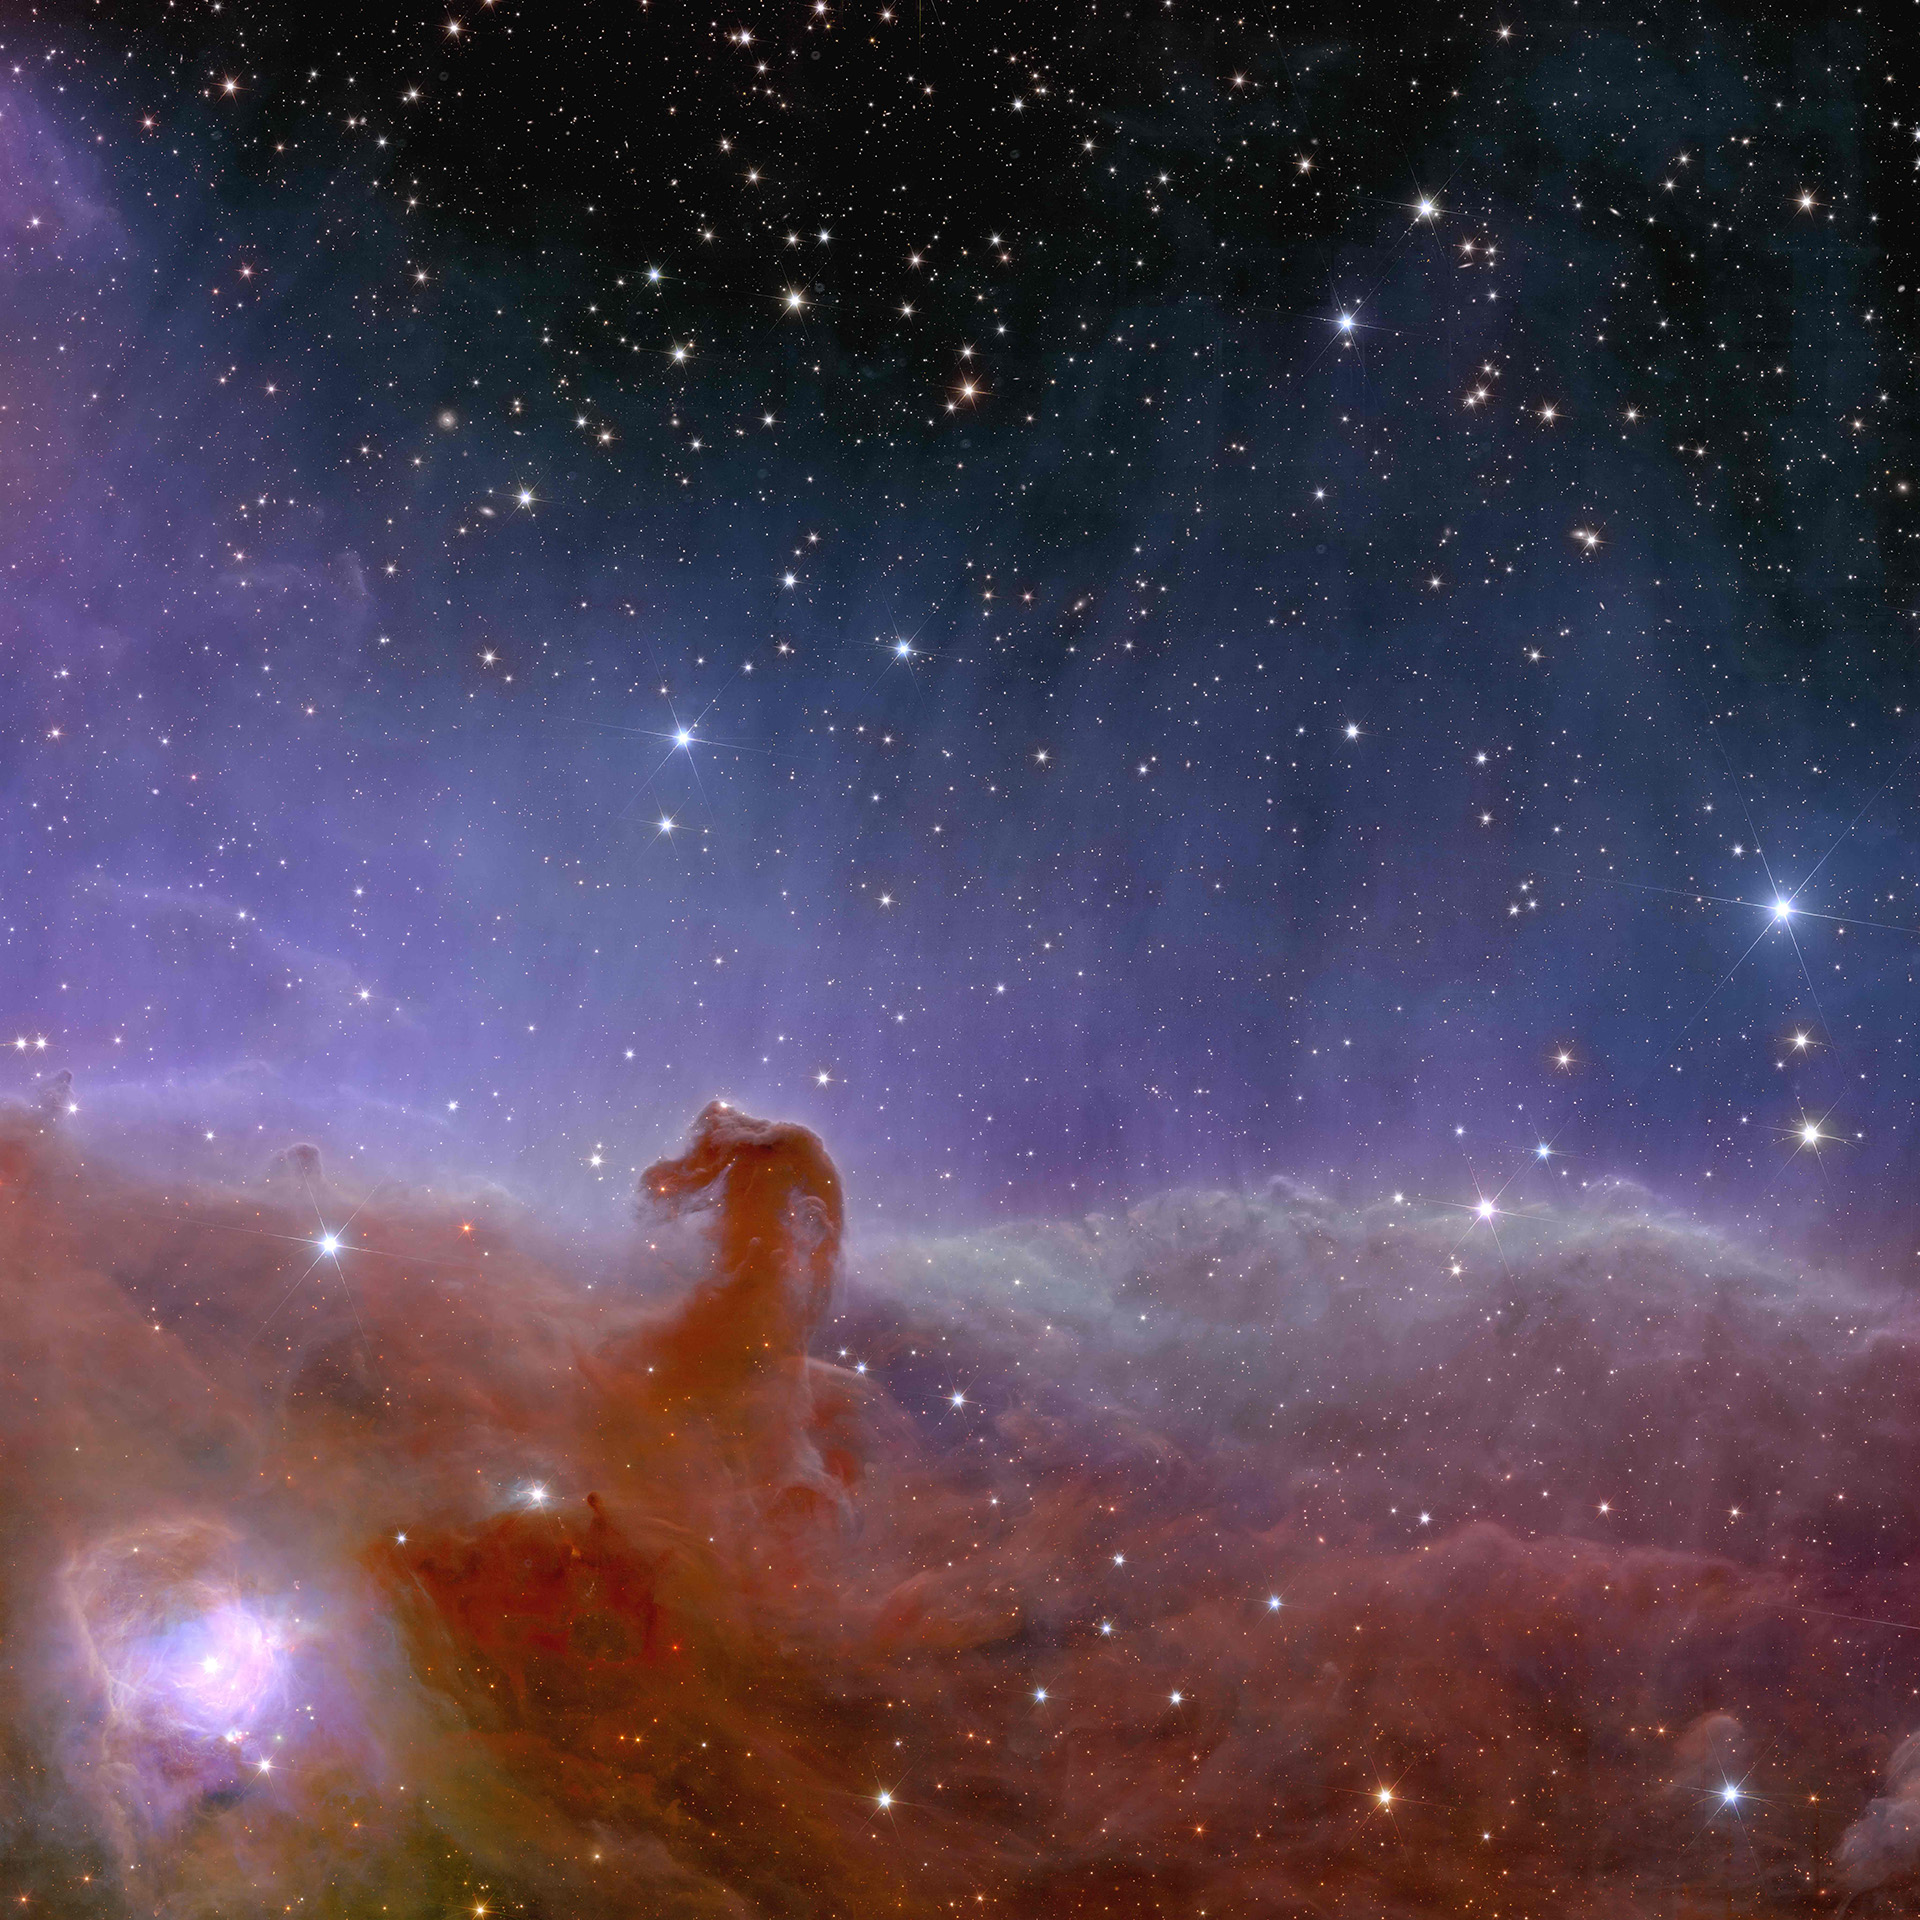 Euclid_s_view_of_the_Horsehead_Nebula